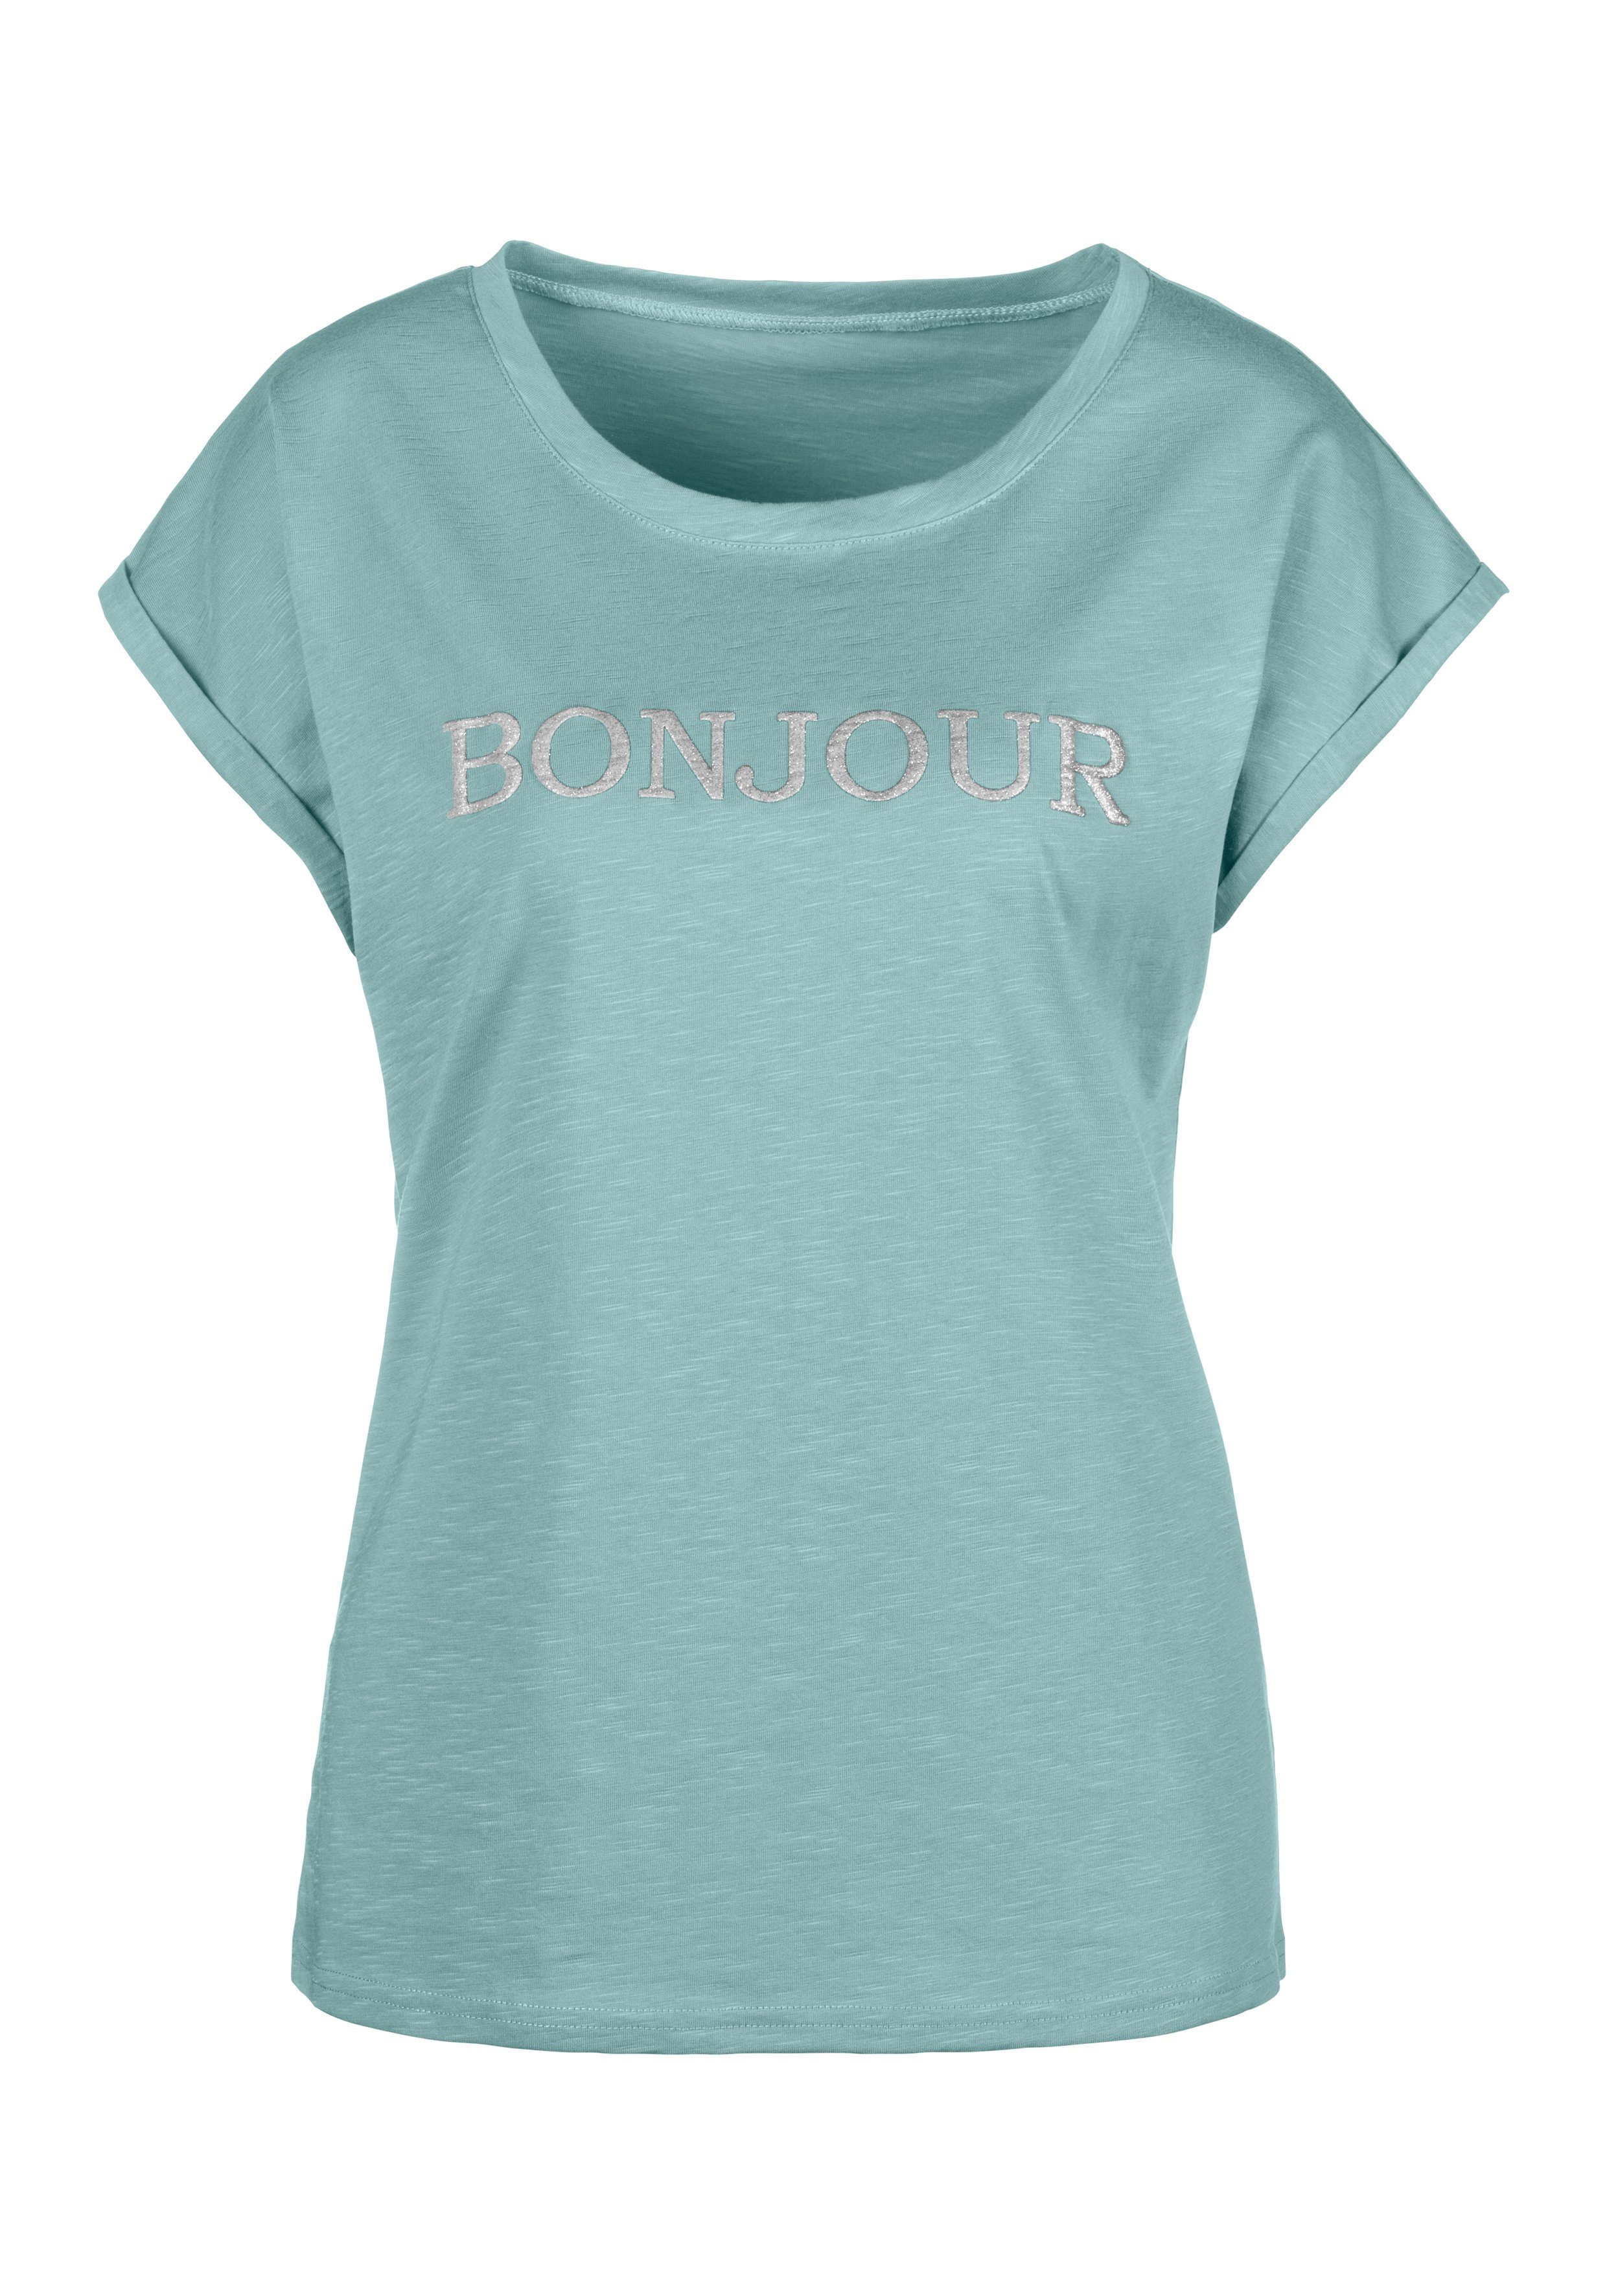 Vivance T-Shirt mit modischem Frontdruck "Bonjour" mint